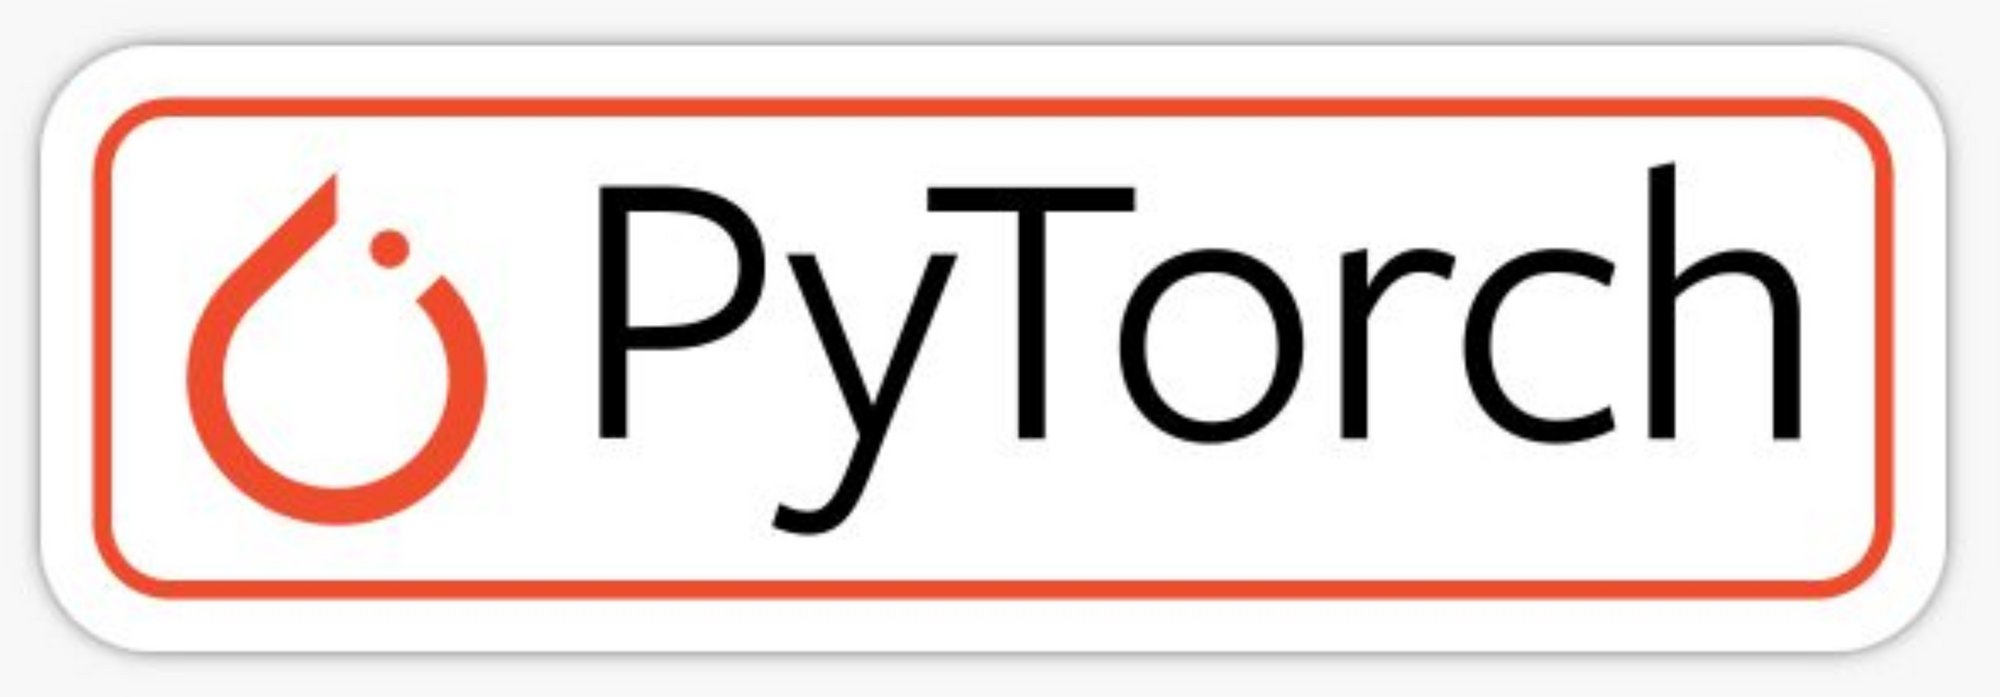 🔥 PyTorch: It's Python on FIRE! 🔥